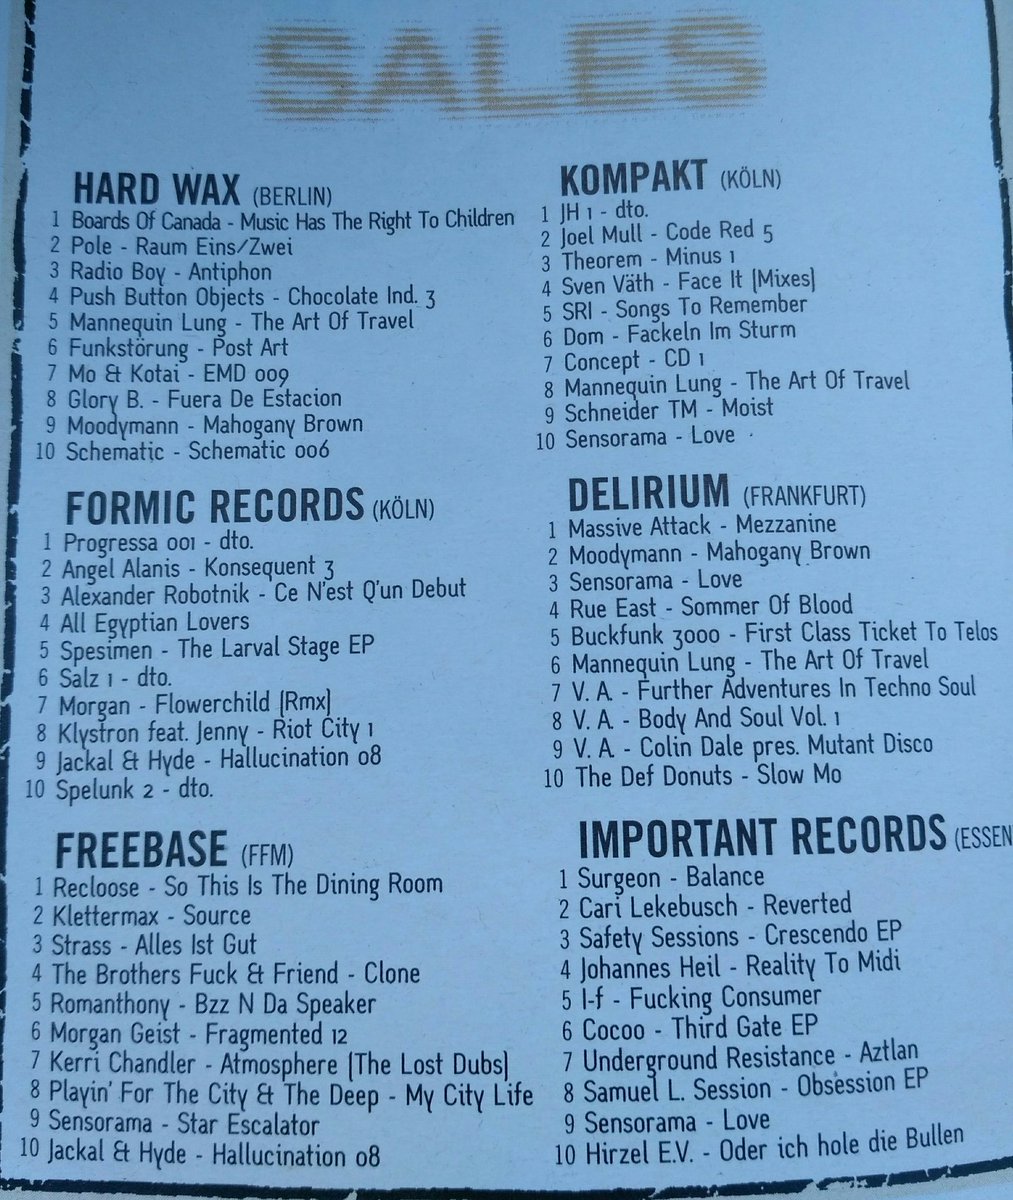 1998 Music Charts